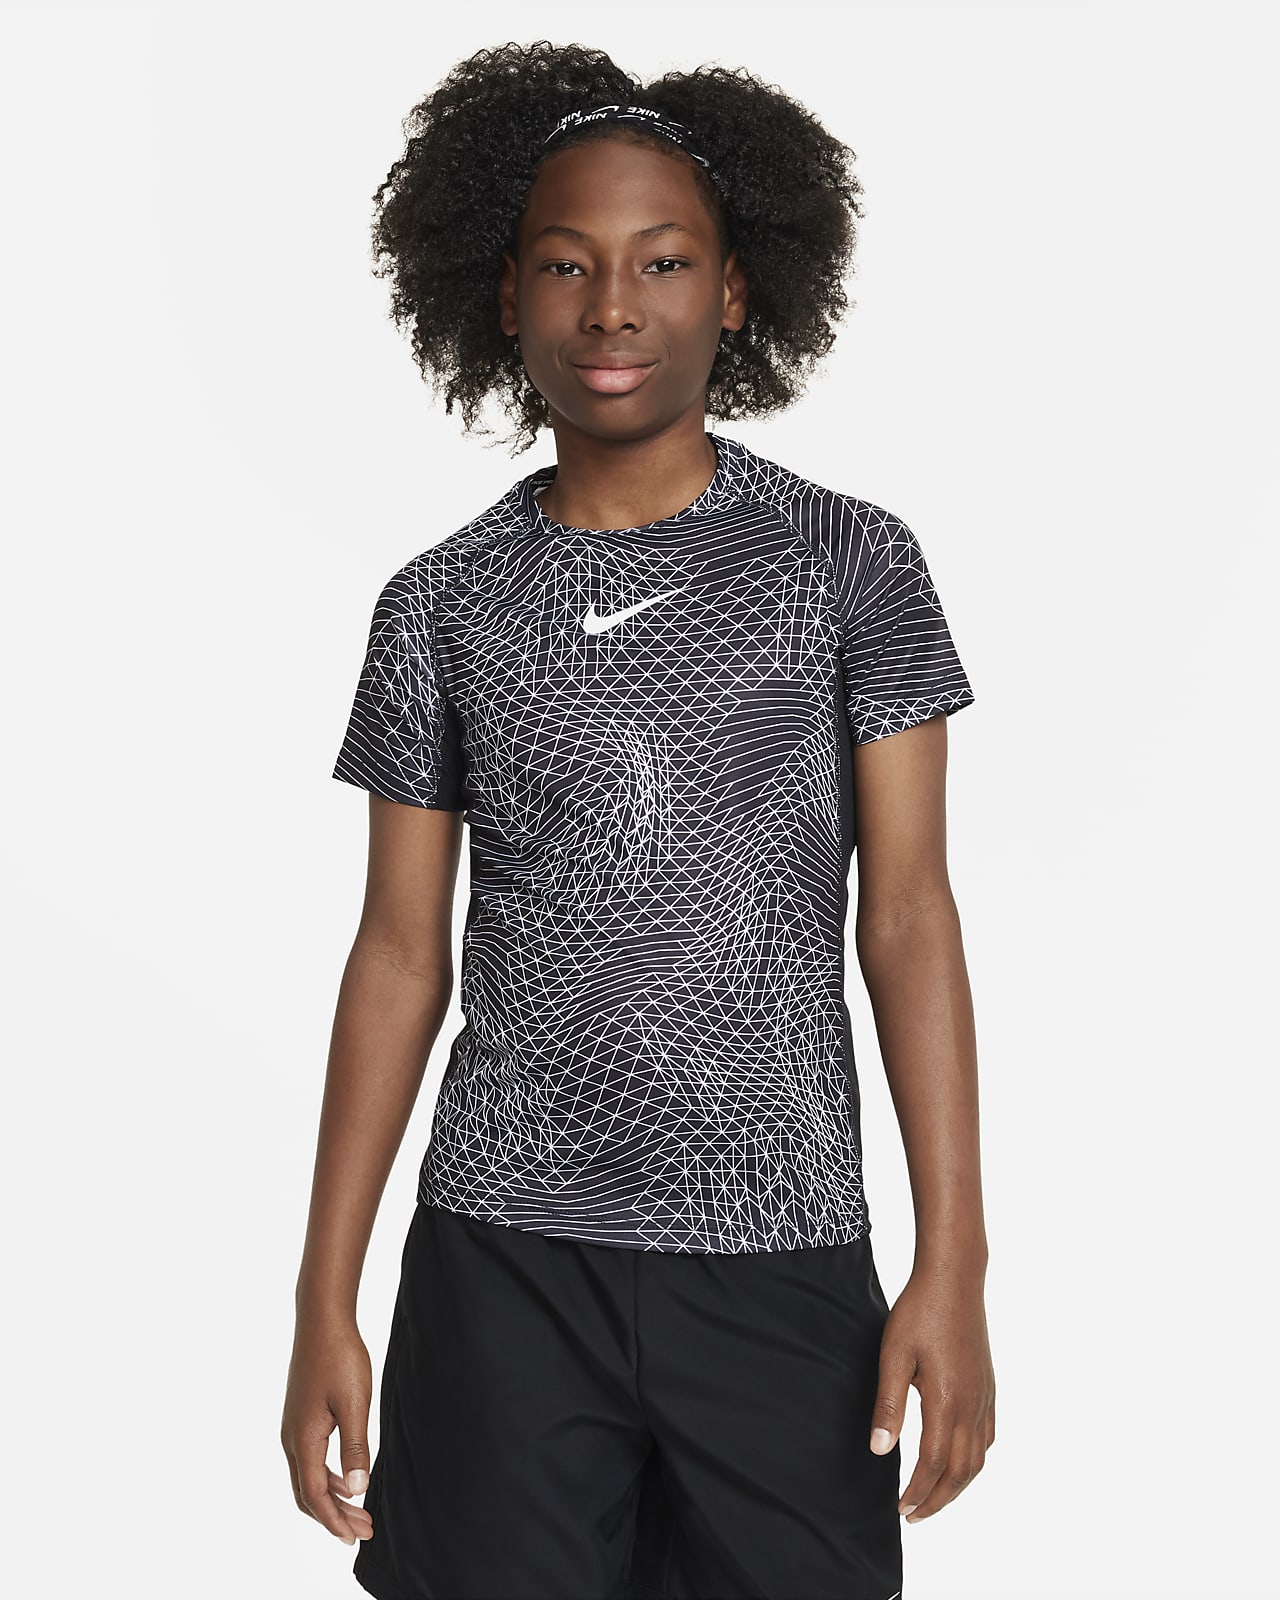 Nike Pro Dri-FIT Older Kids' (Boys') Short-Sleeve Top